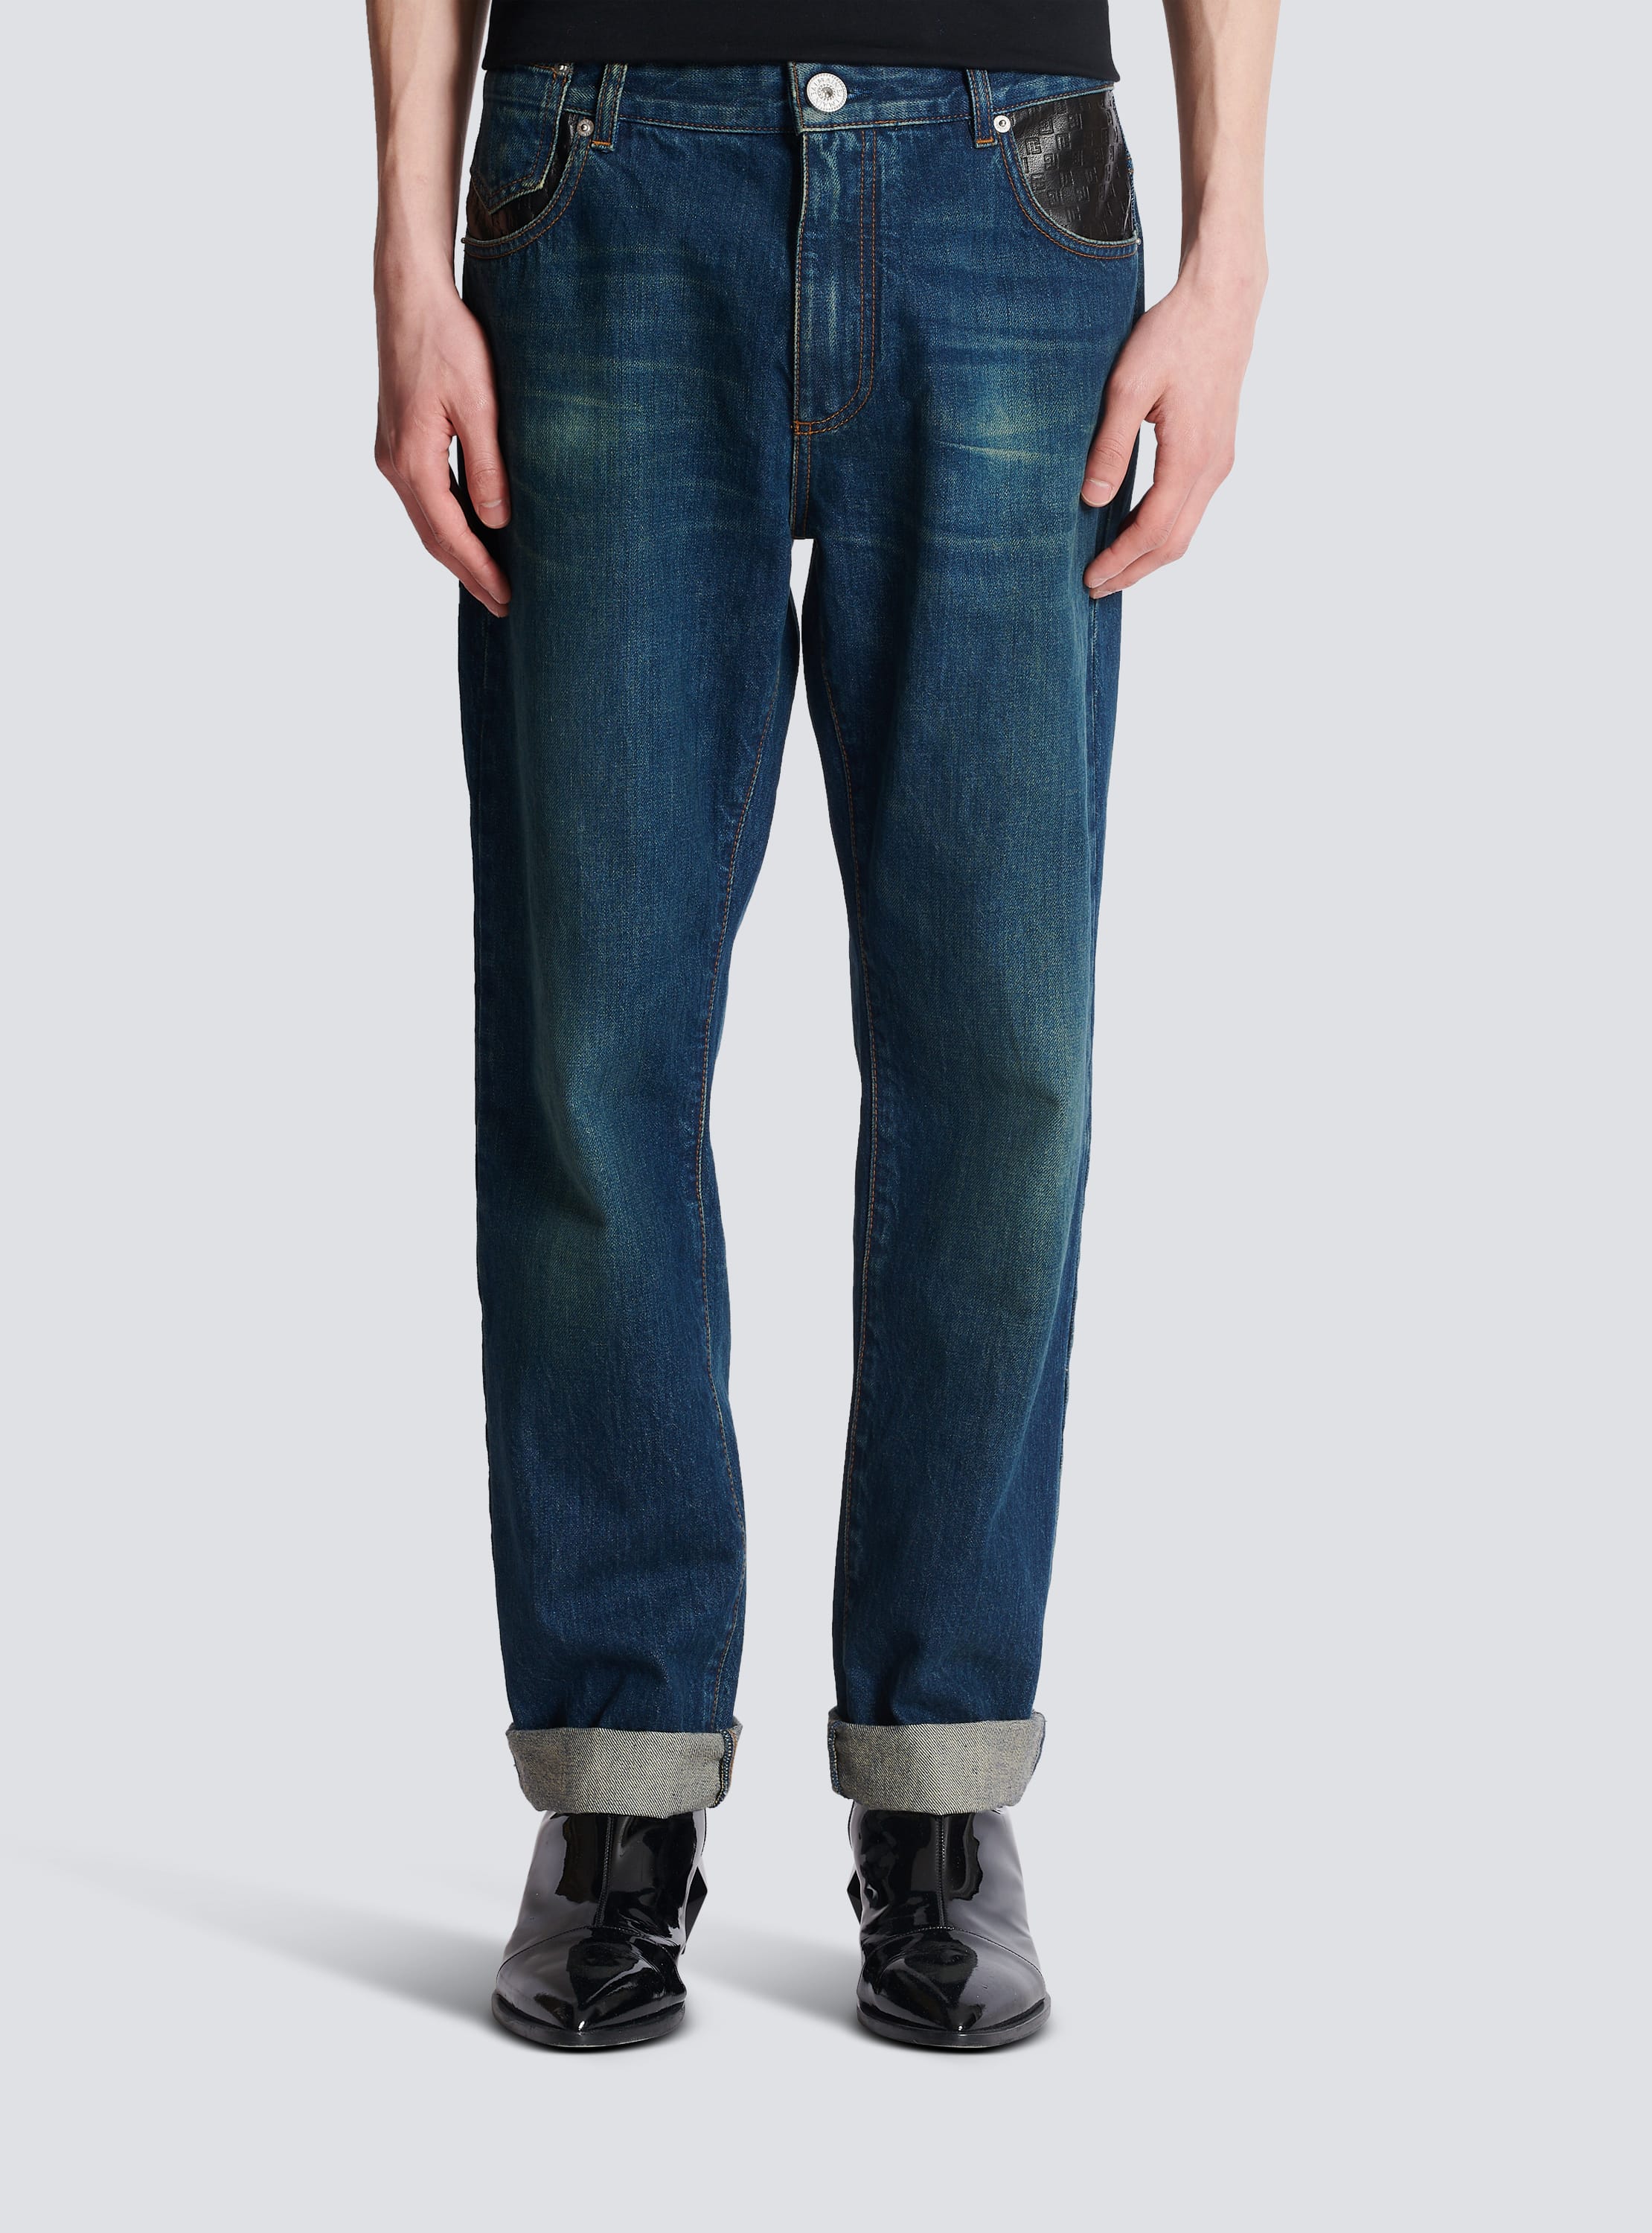 BALMAIN pockets Men | jeans leather navy - Straight-leg with